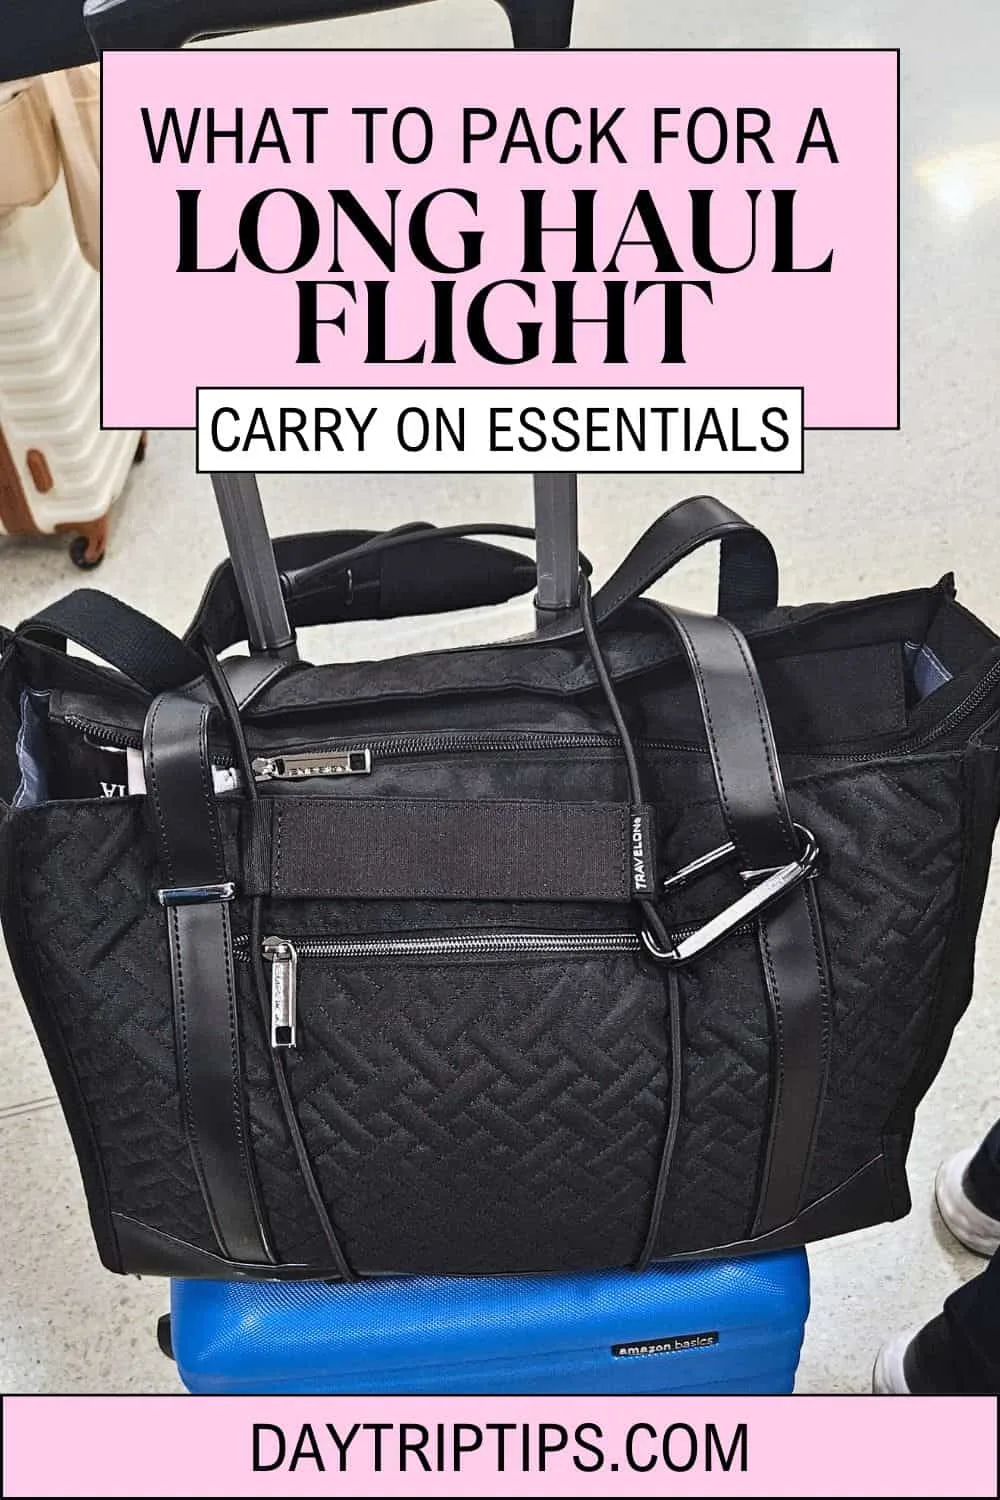 BEST Long Haul Flight Essentials to Pack